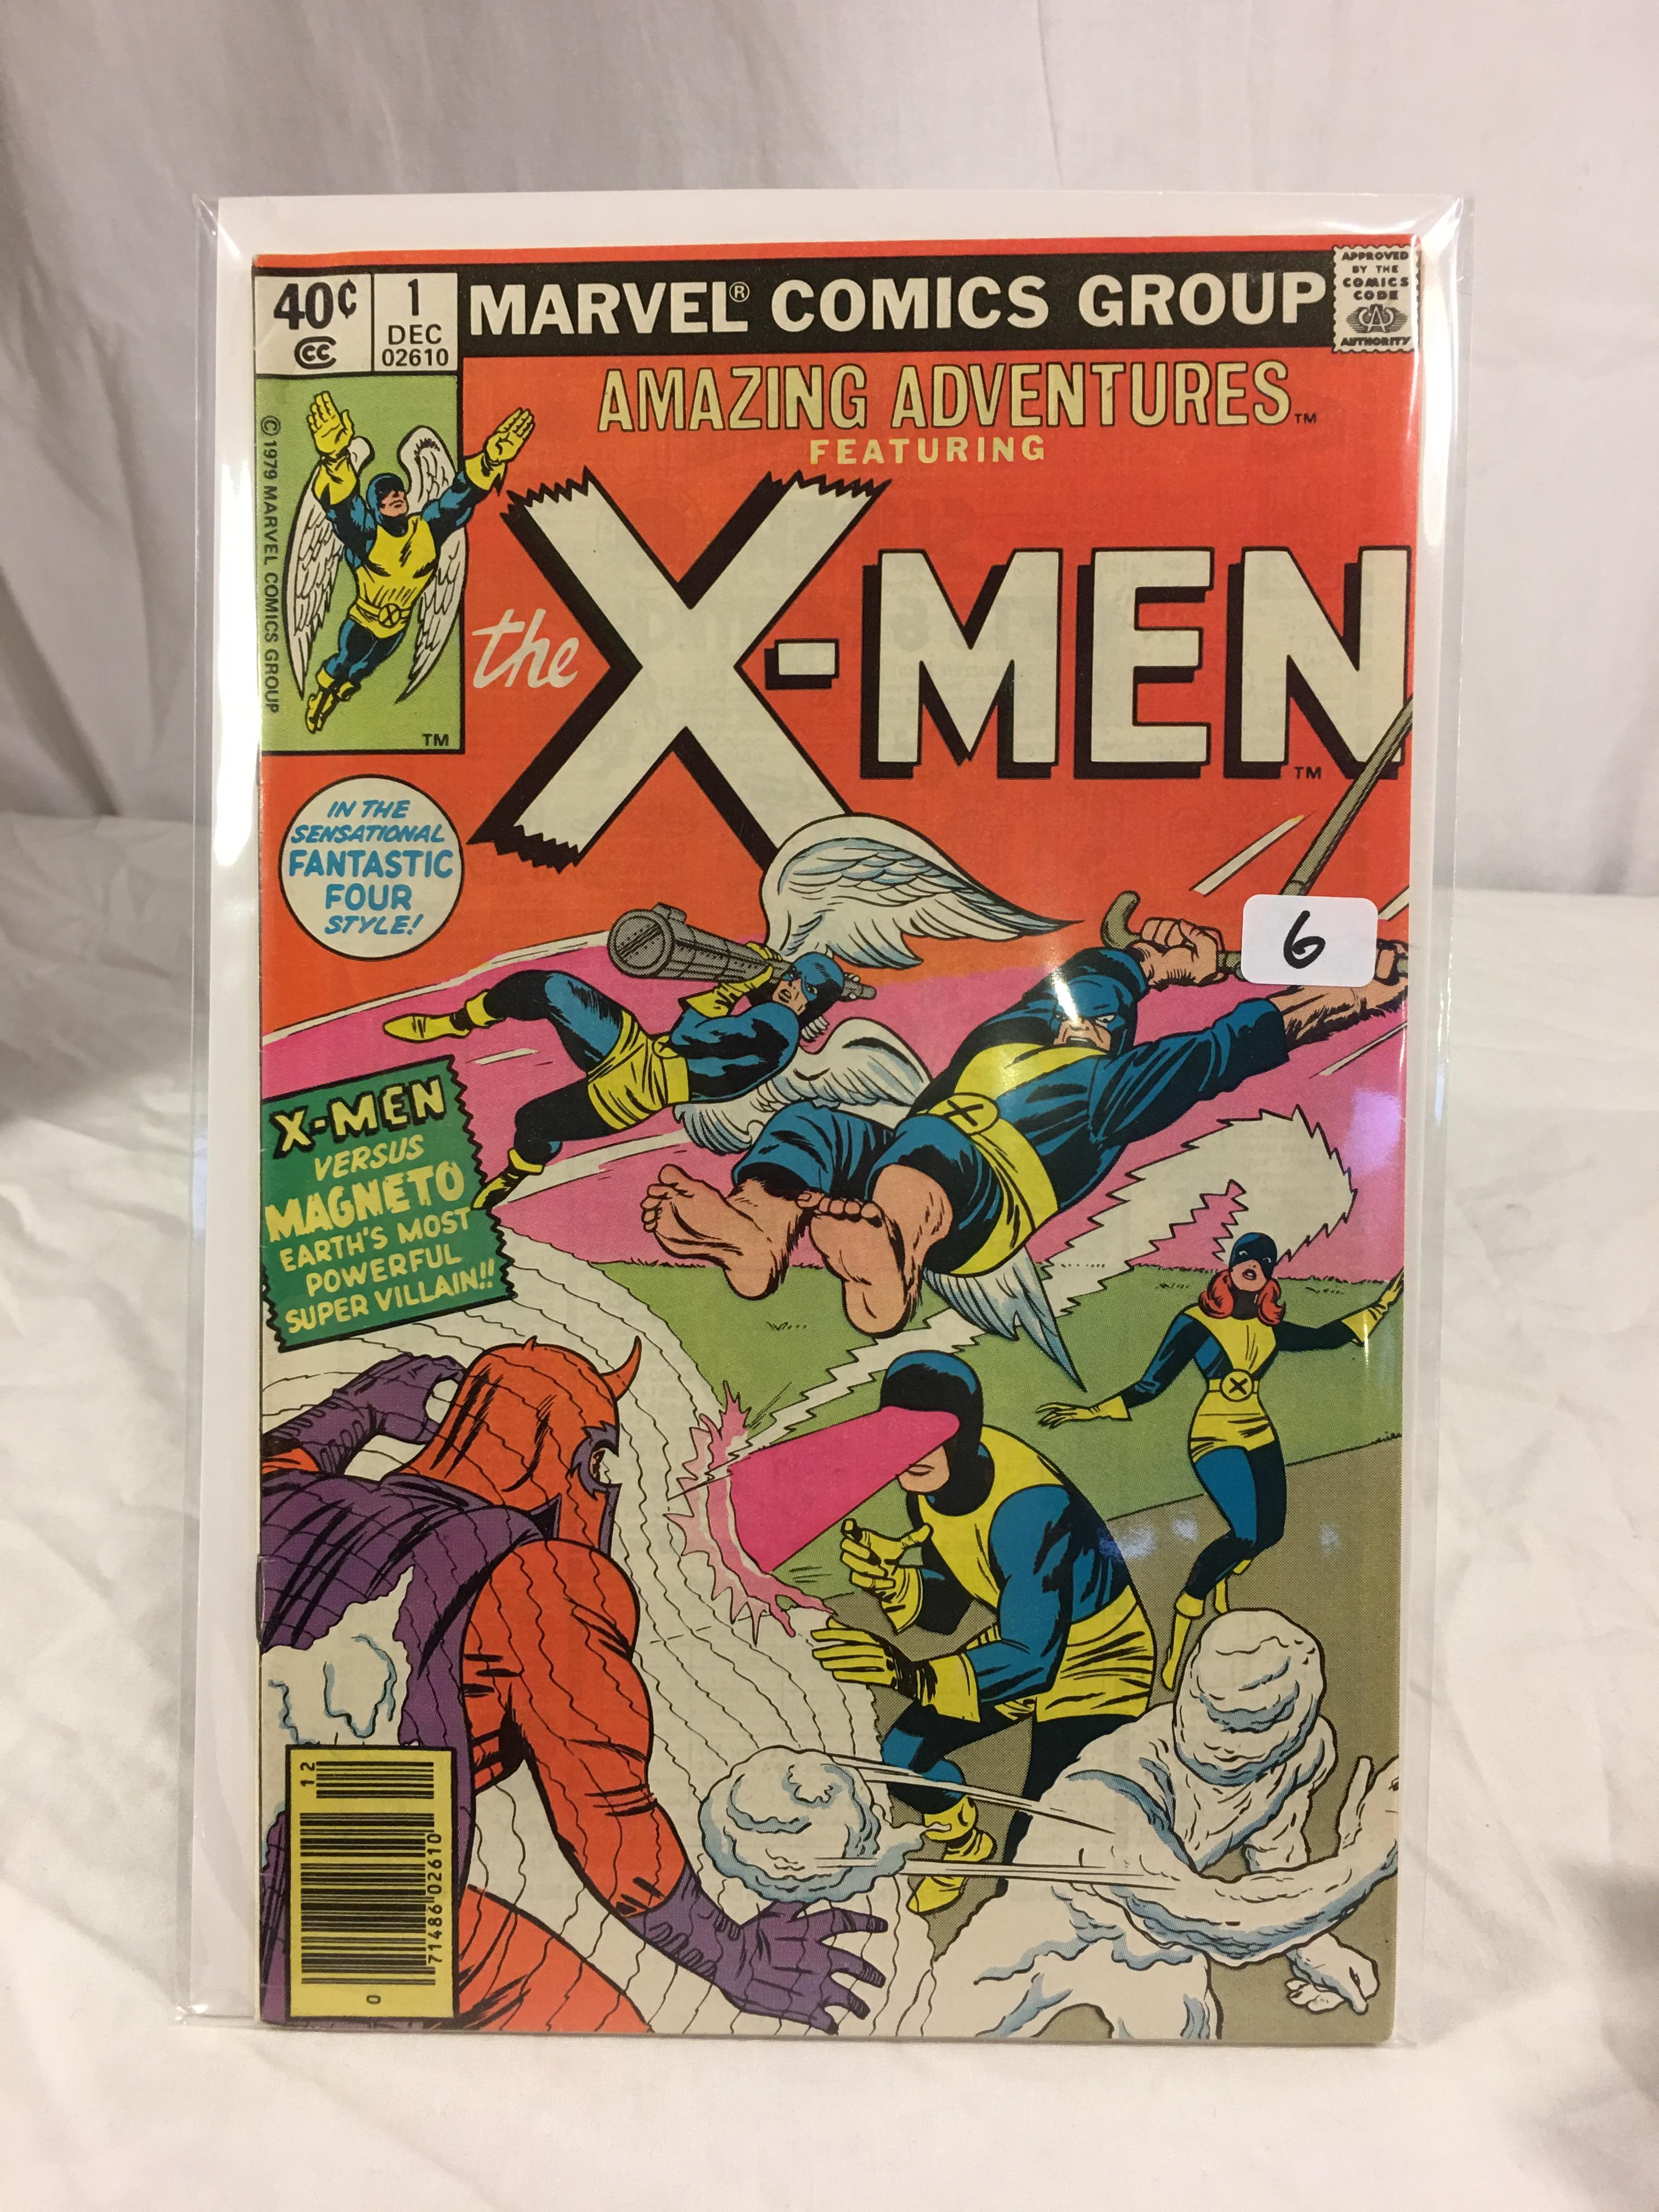 Collector Vintage Marvel Comics Amazing Adventures featuring The X-men #1 Comic Book